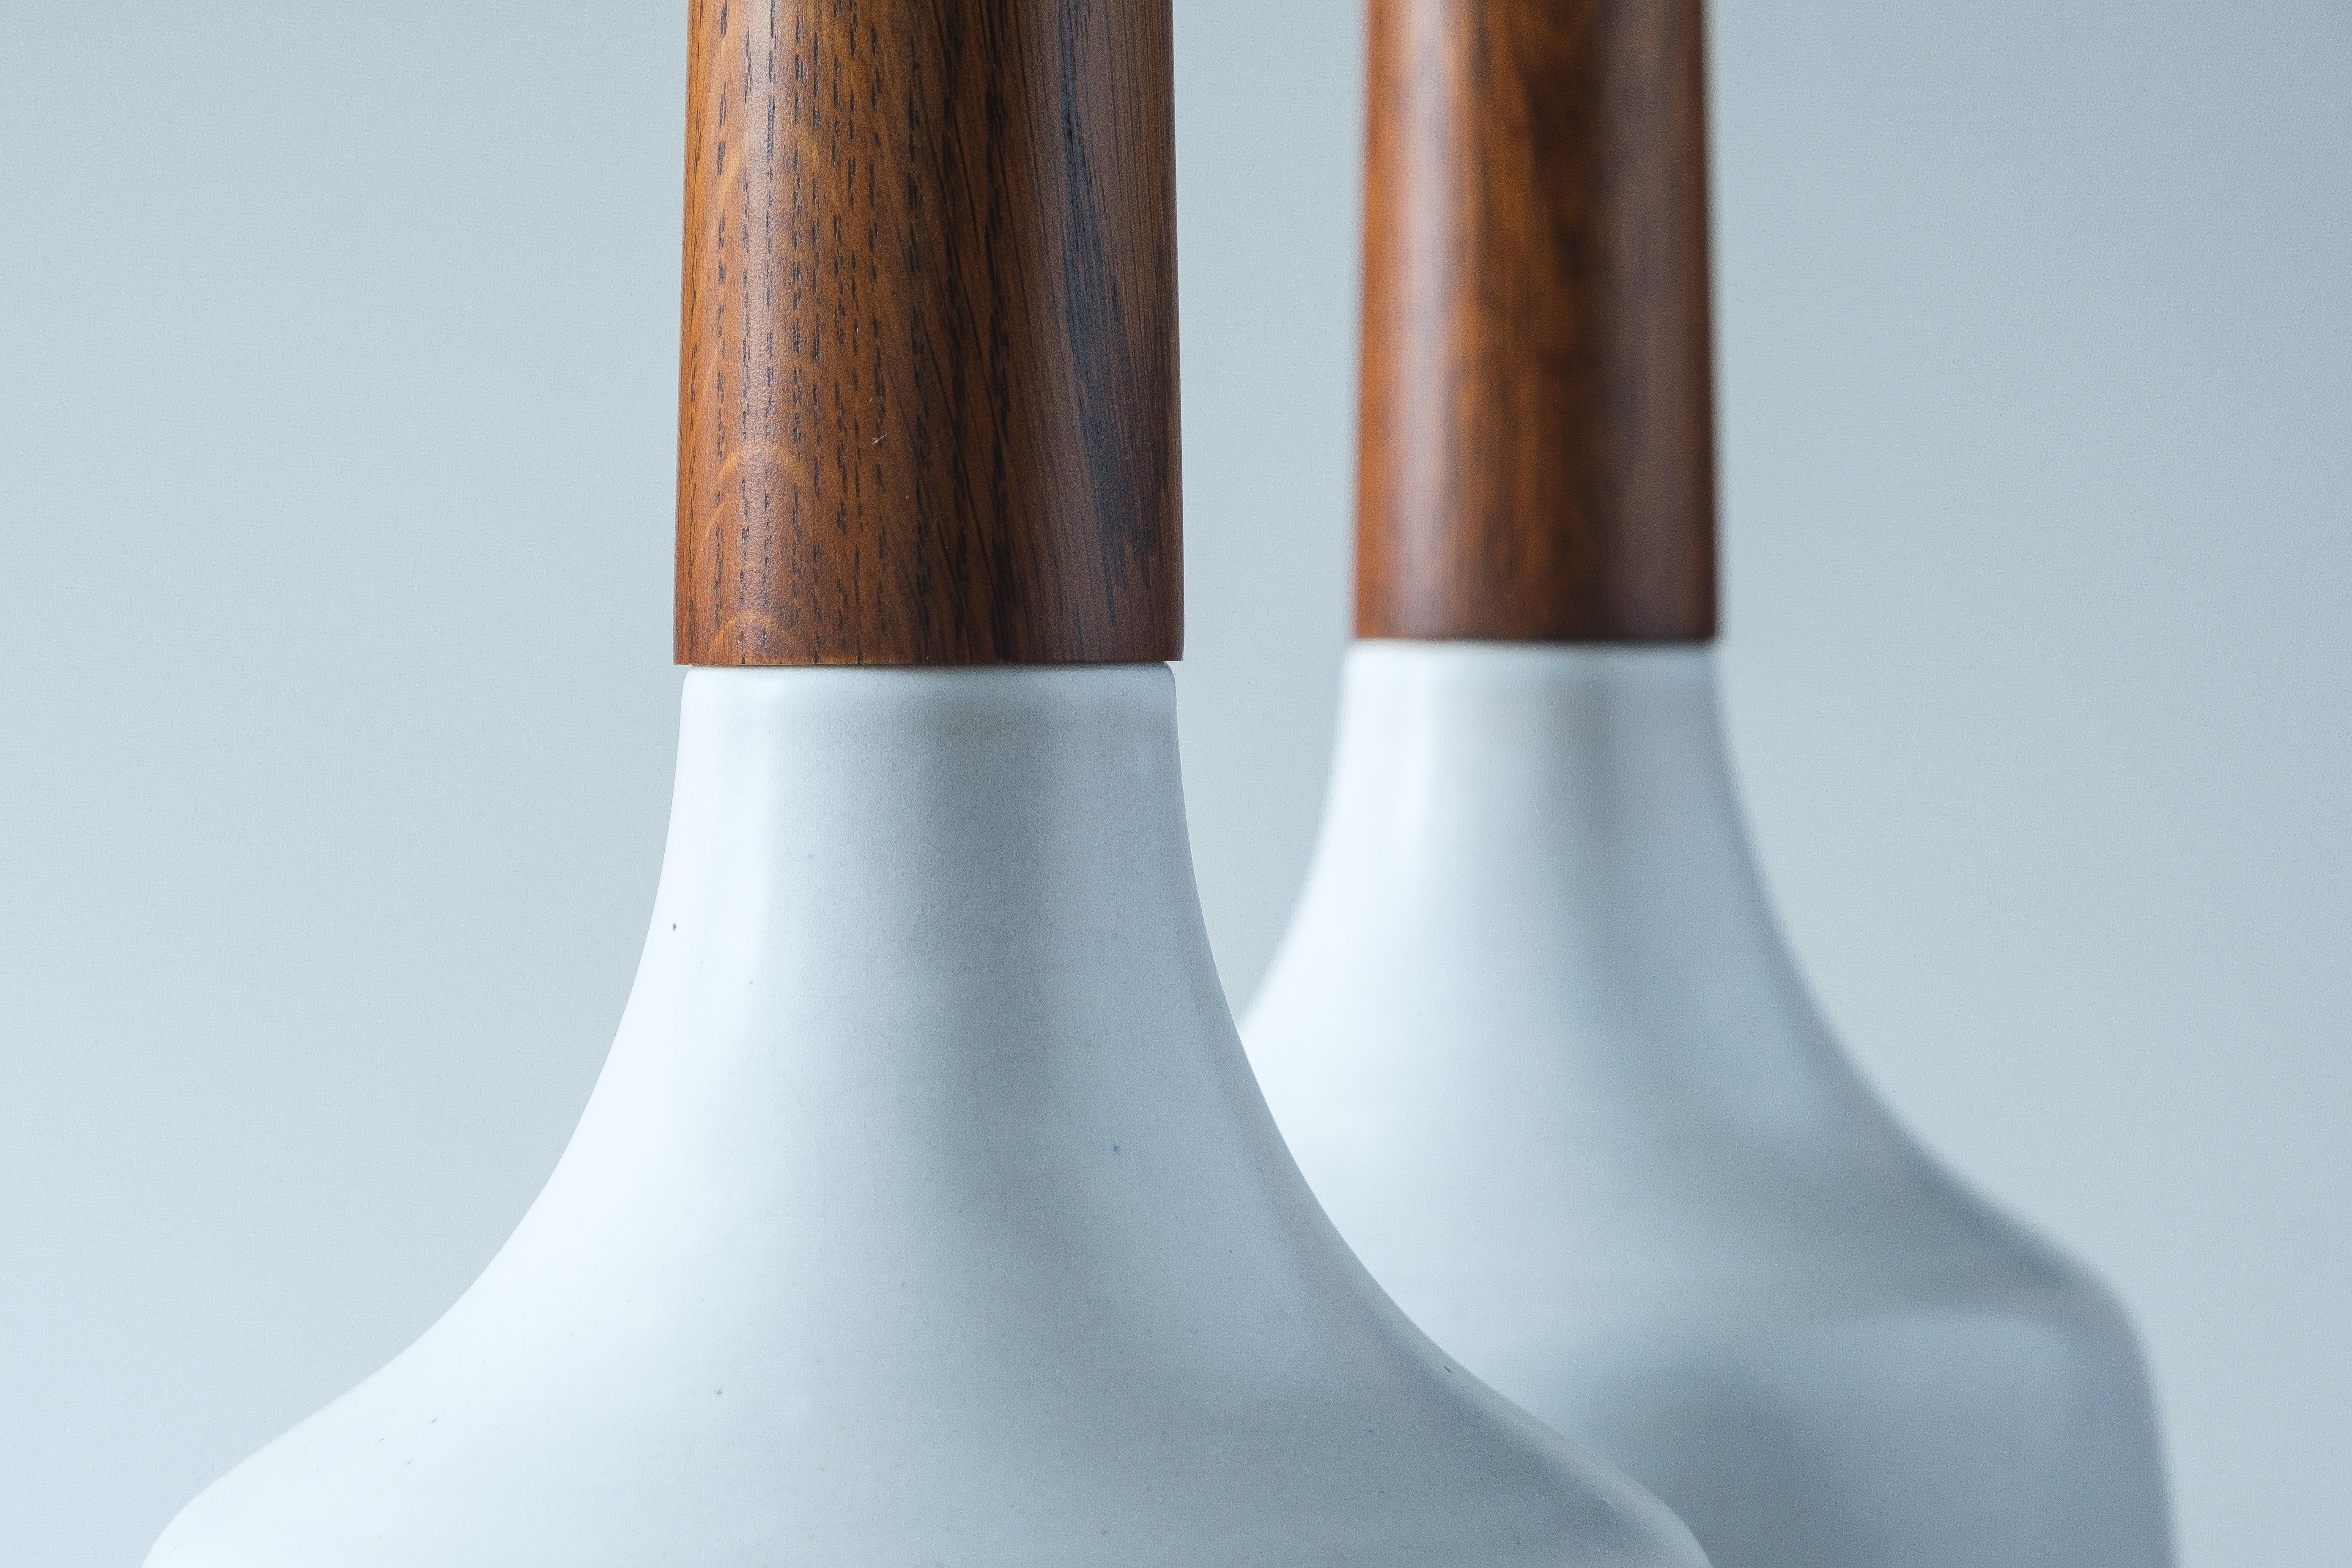 Brass Martz / Marshall Studios Ceramic Table Lamp Pair — Speckled White Glaze with Tea